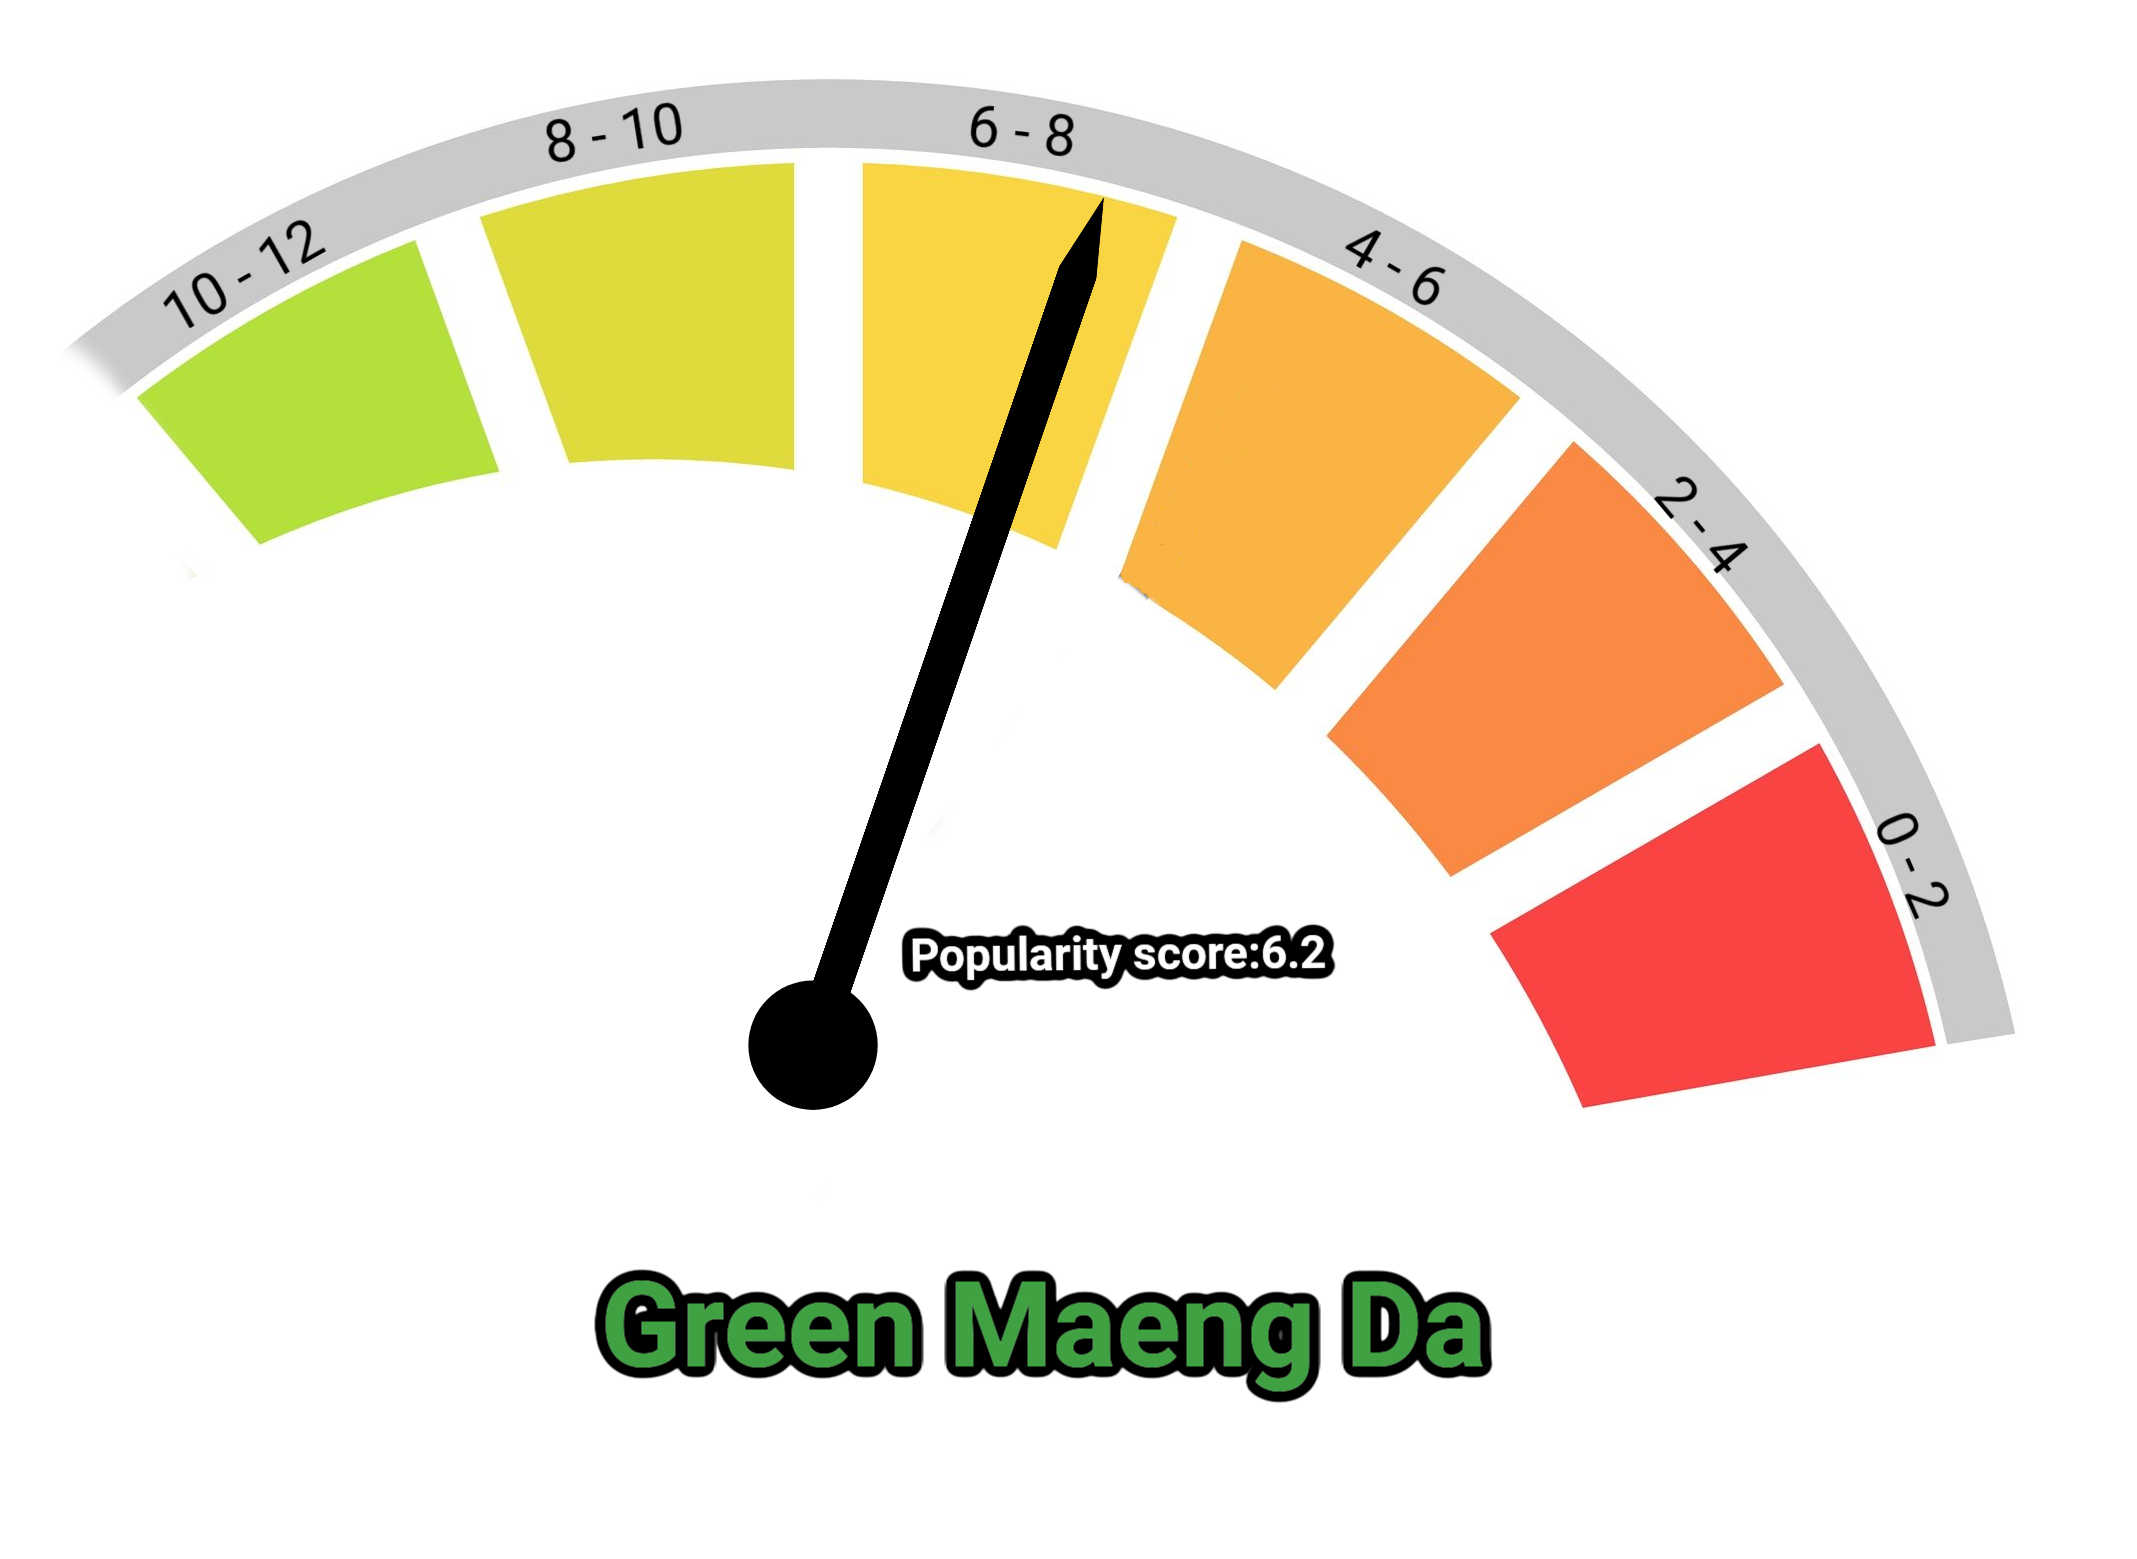 image of green maeng da kratom popularity score